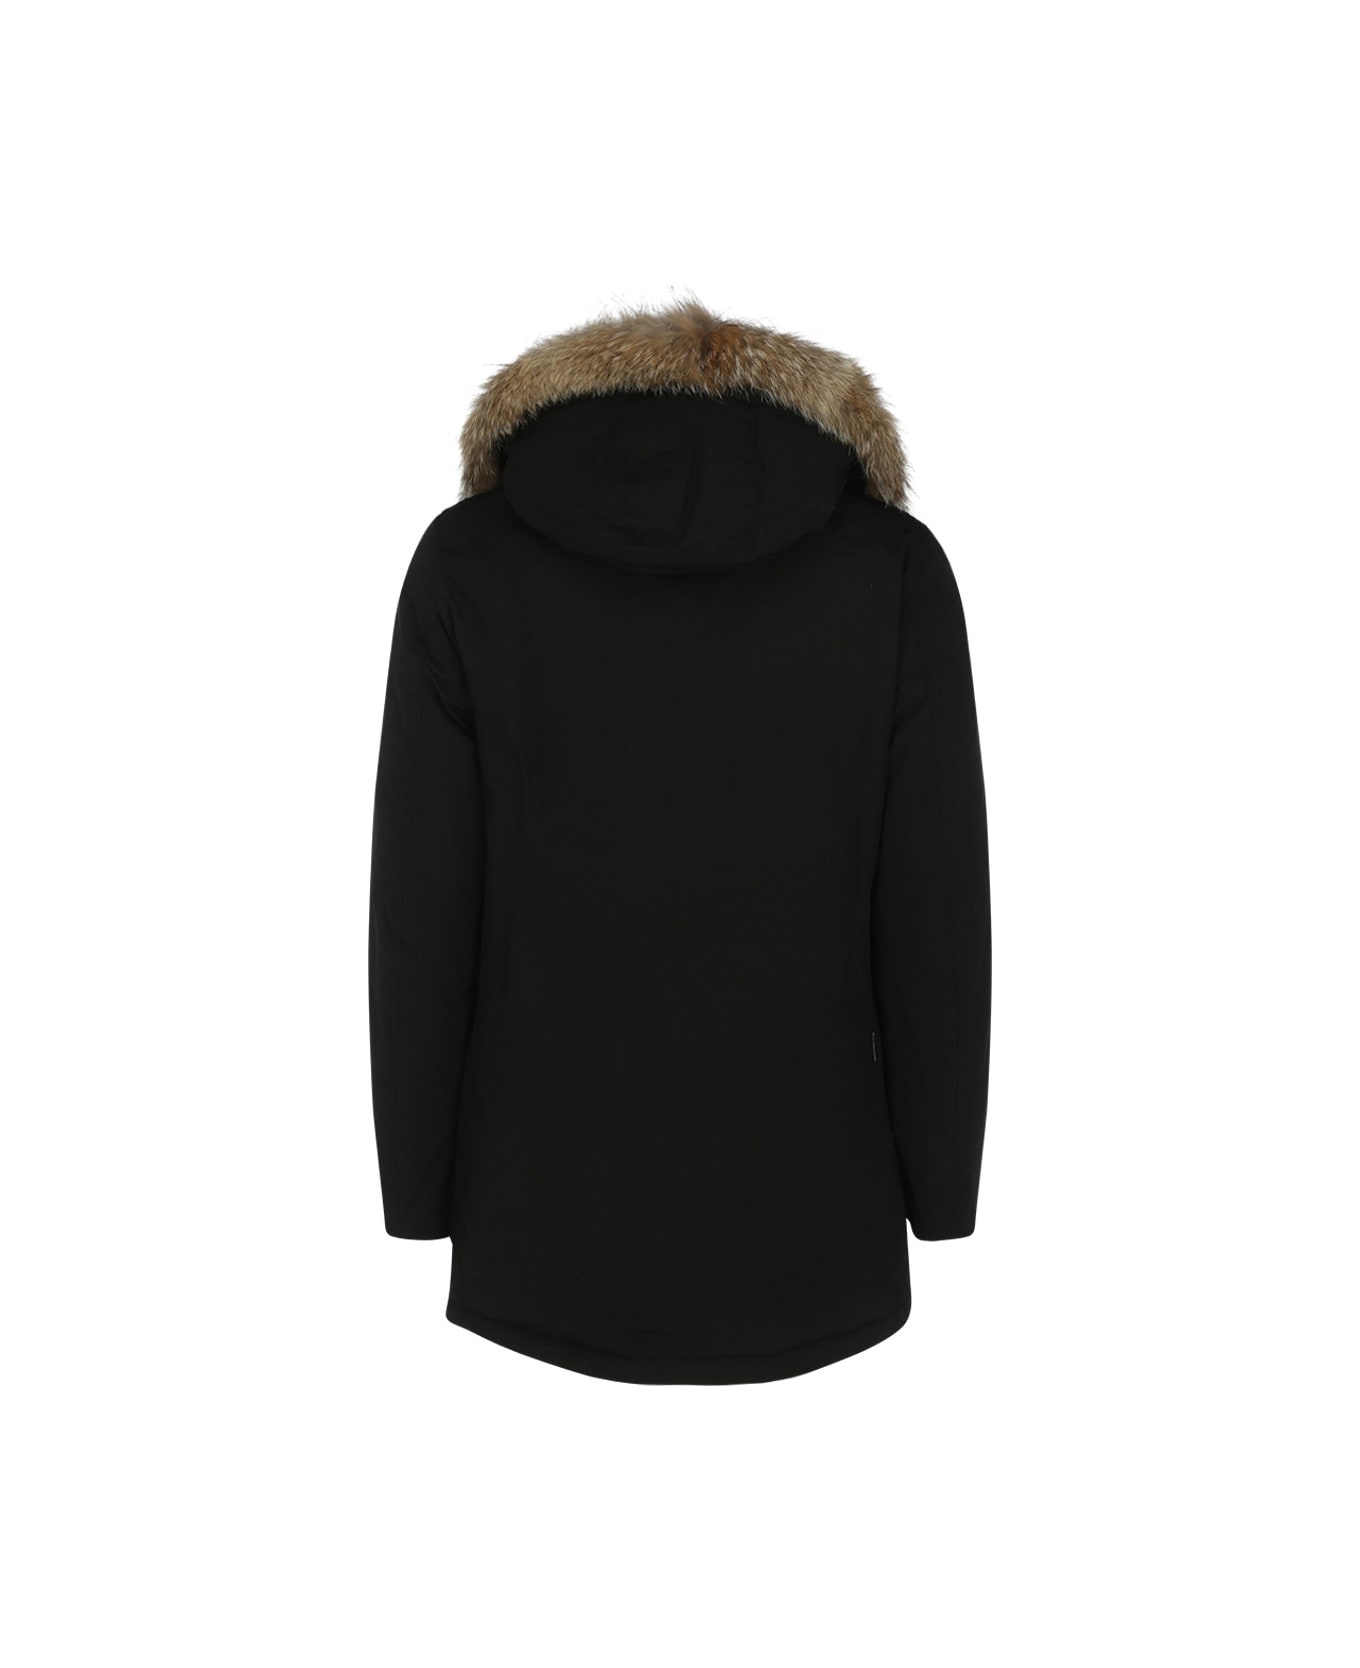 Woolrich Parka Arctic Jacket - Blk Black